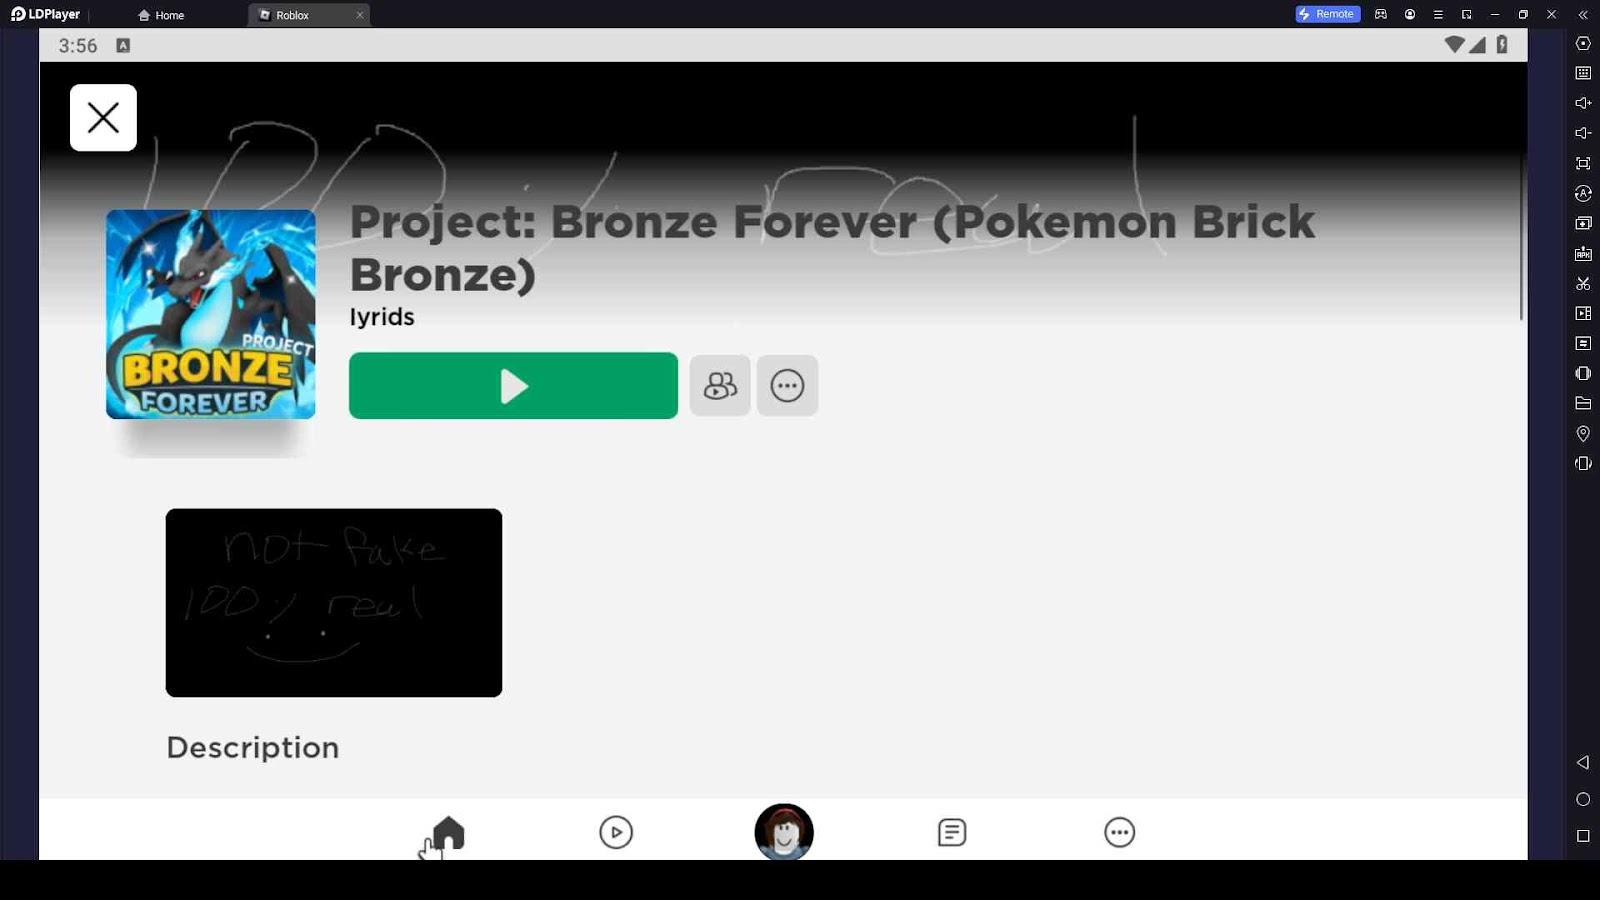 Project Bronze Forever codes – redeem 'em all